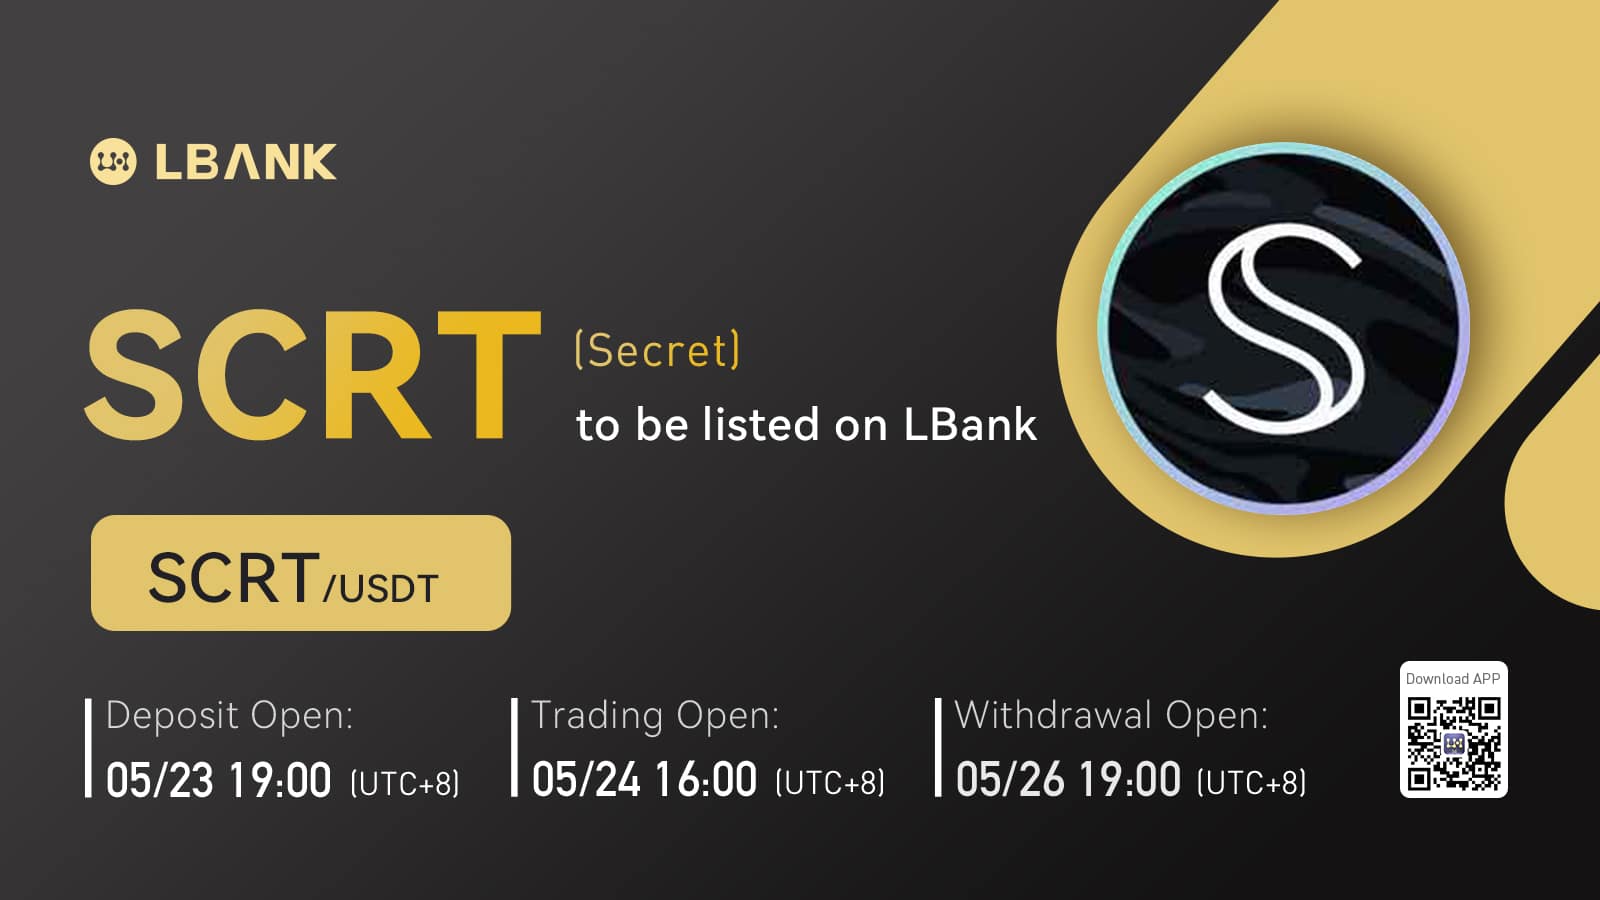 Lbank ลิสต์เหรียญ Secret (Scrt) พร้อมคู่เทรด Scrt/Usdt